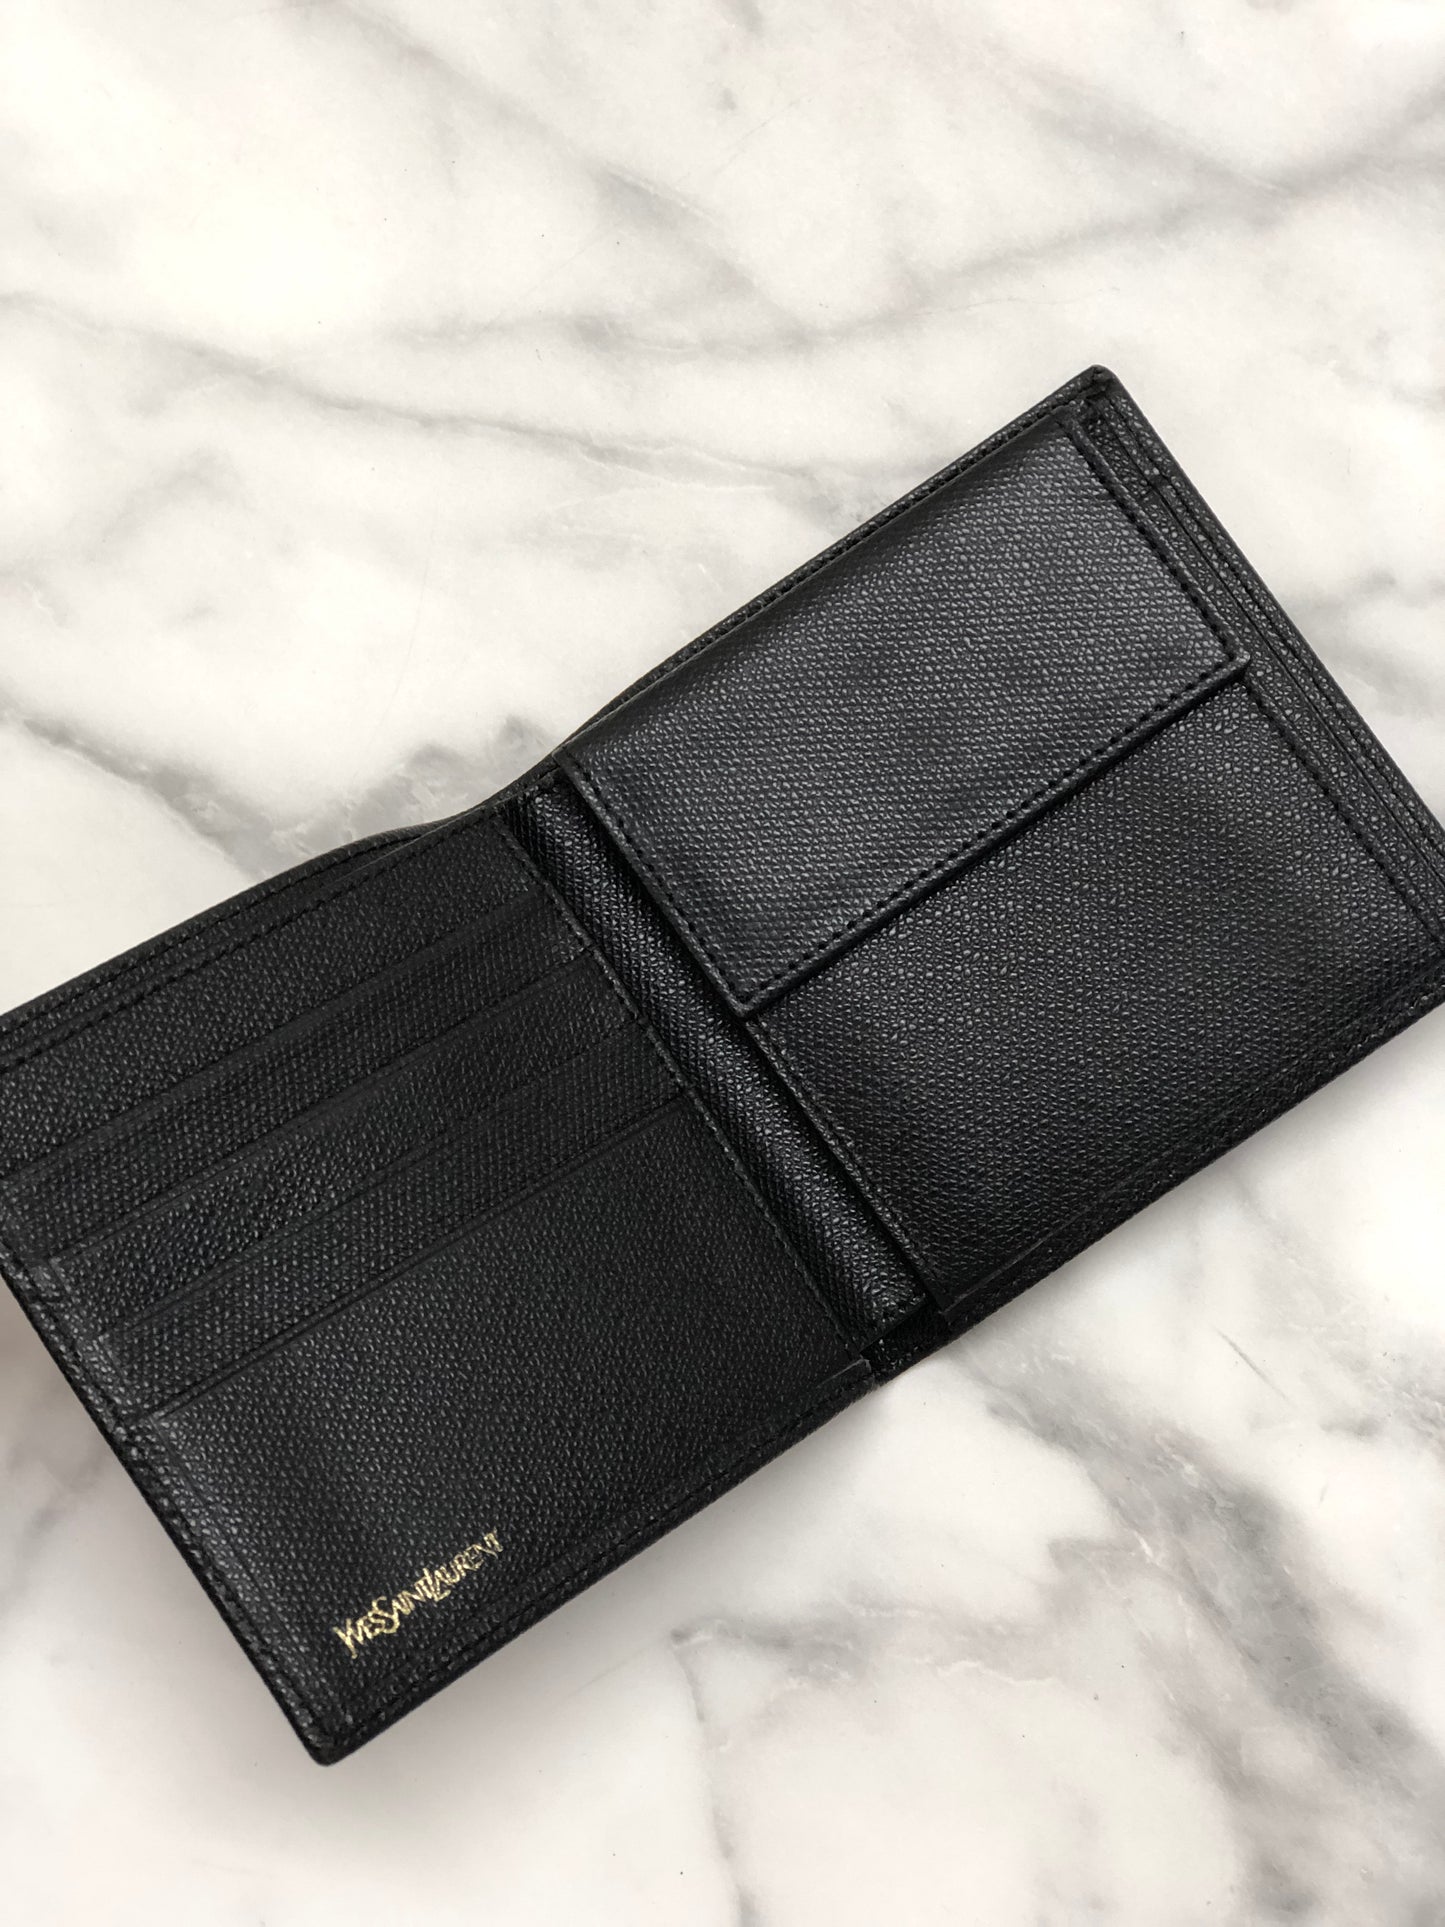 Yves Saint Laurent YSL motif Compact Wallet leather Black vfdxyd